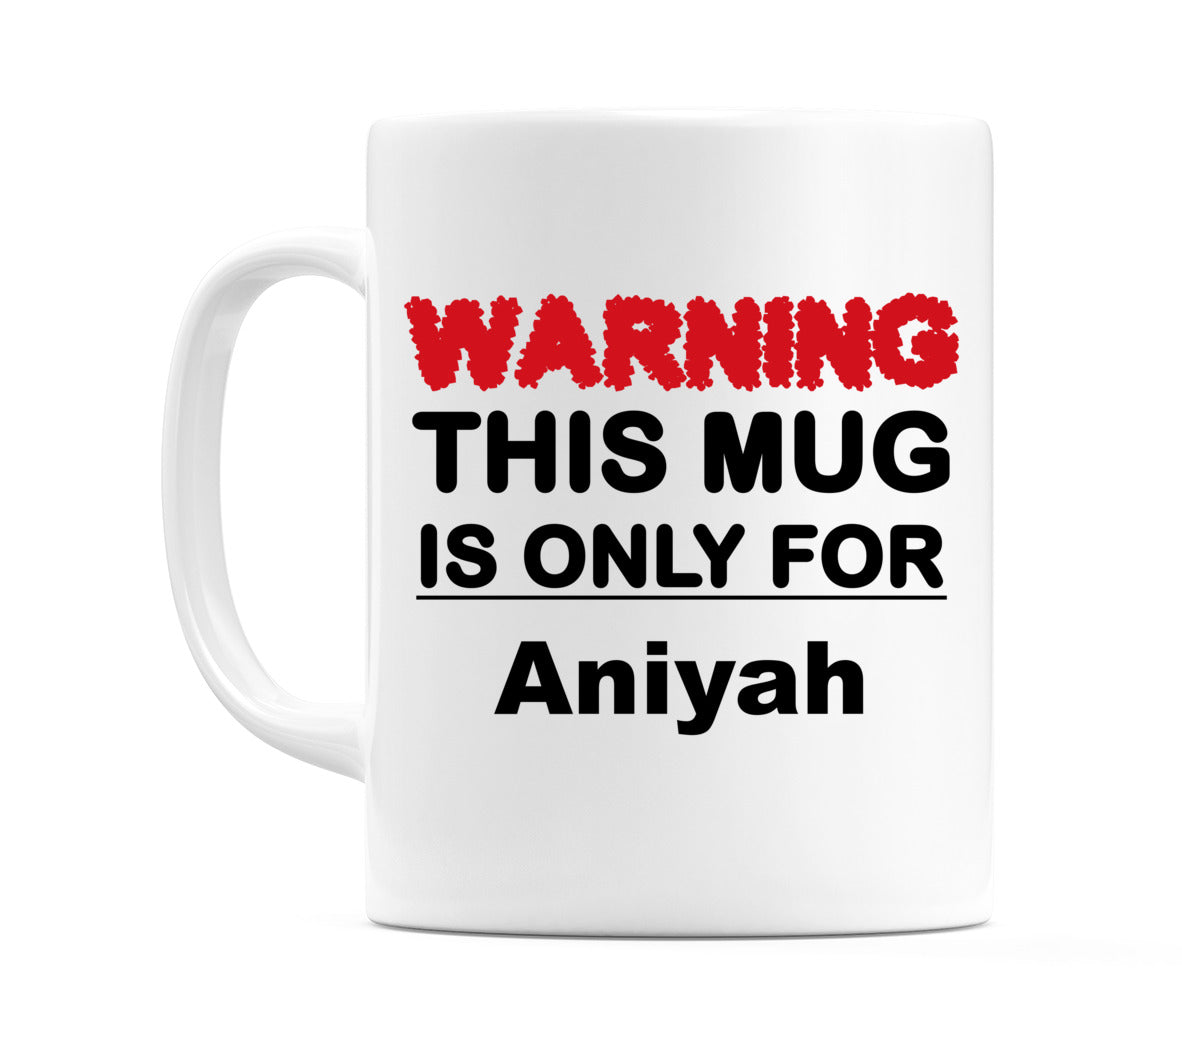 Warning This Mug is ONLY for Aniyah Mug